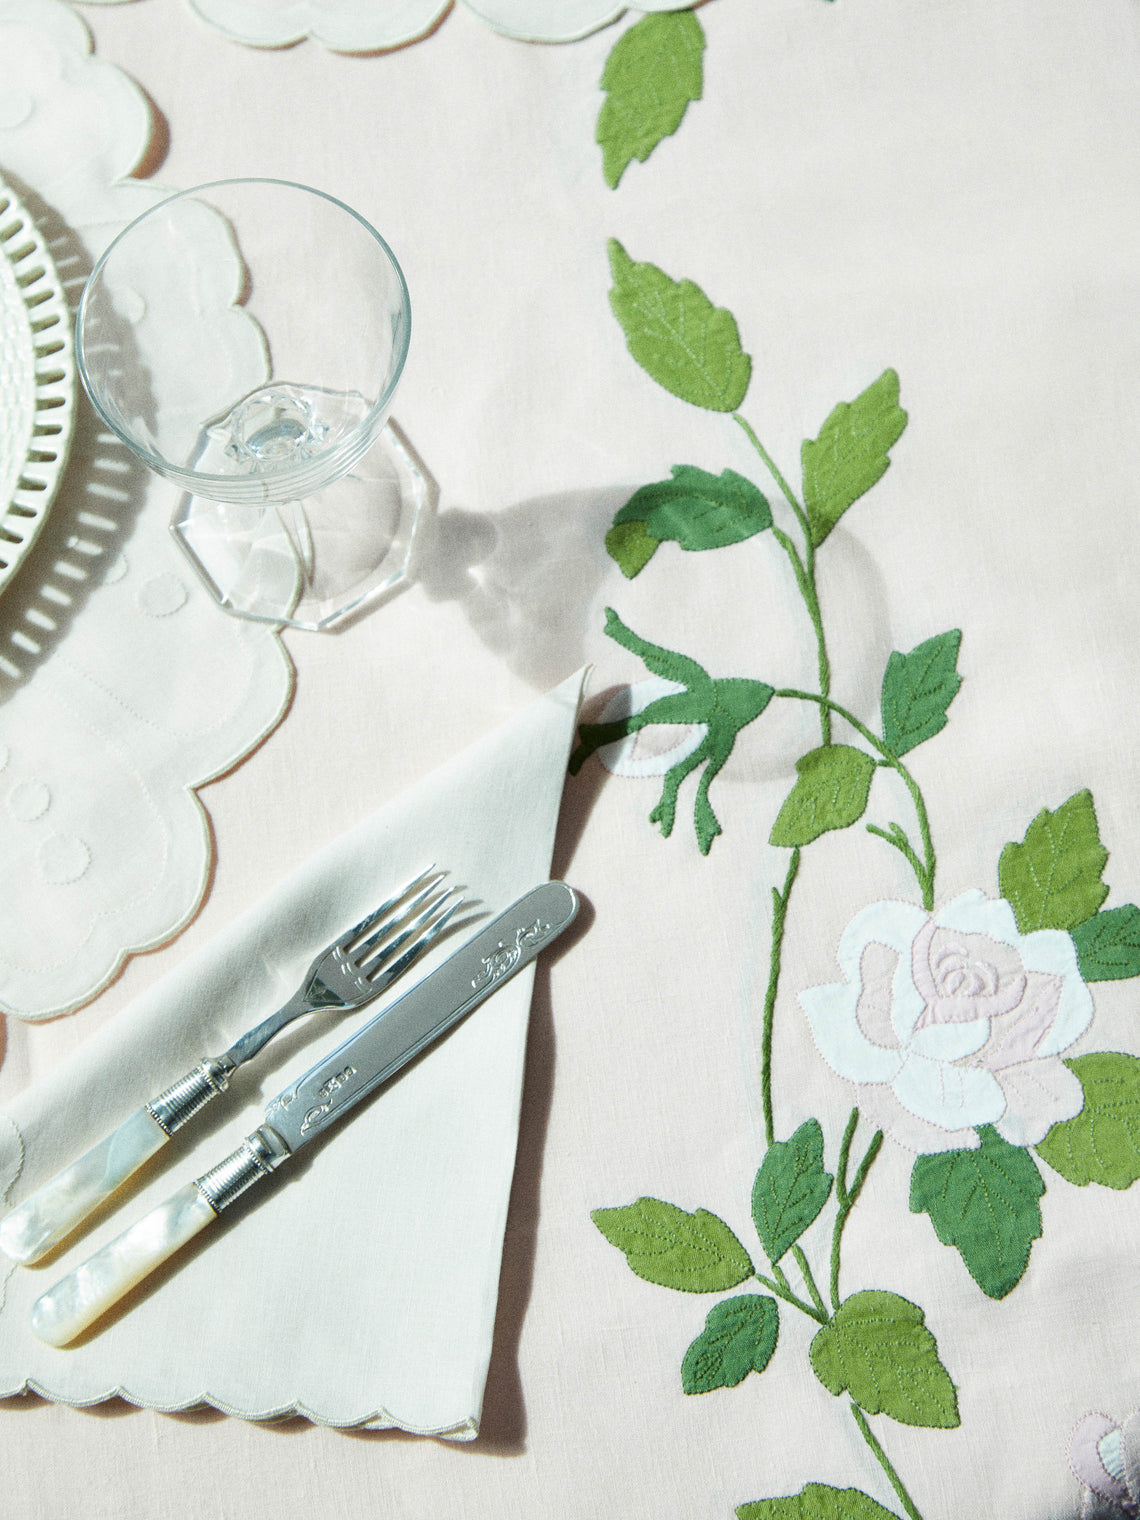 Taf Firenze - Rose Hand-Embroidered Linen Tablecloth and Napkins (Set of 6) - Pink - ABASK